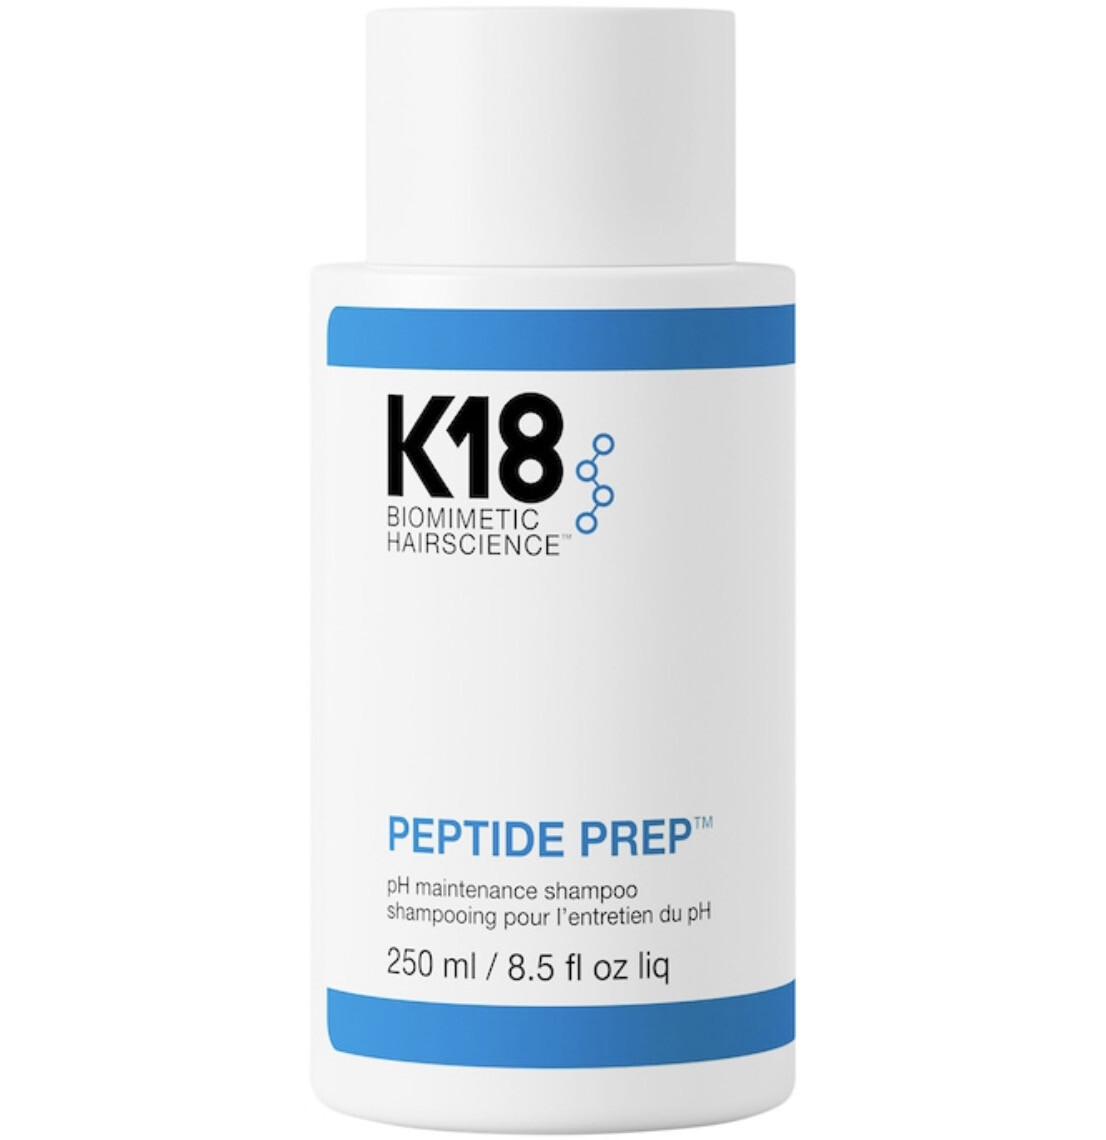 K18 Biomimetic Hairscience - PEPTIDE PREP™ pH Maintenance Shampoo | 250 mL